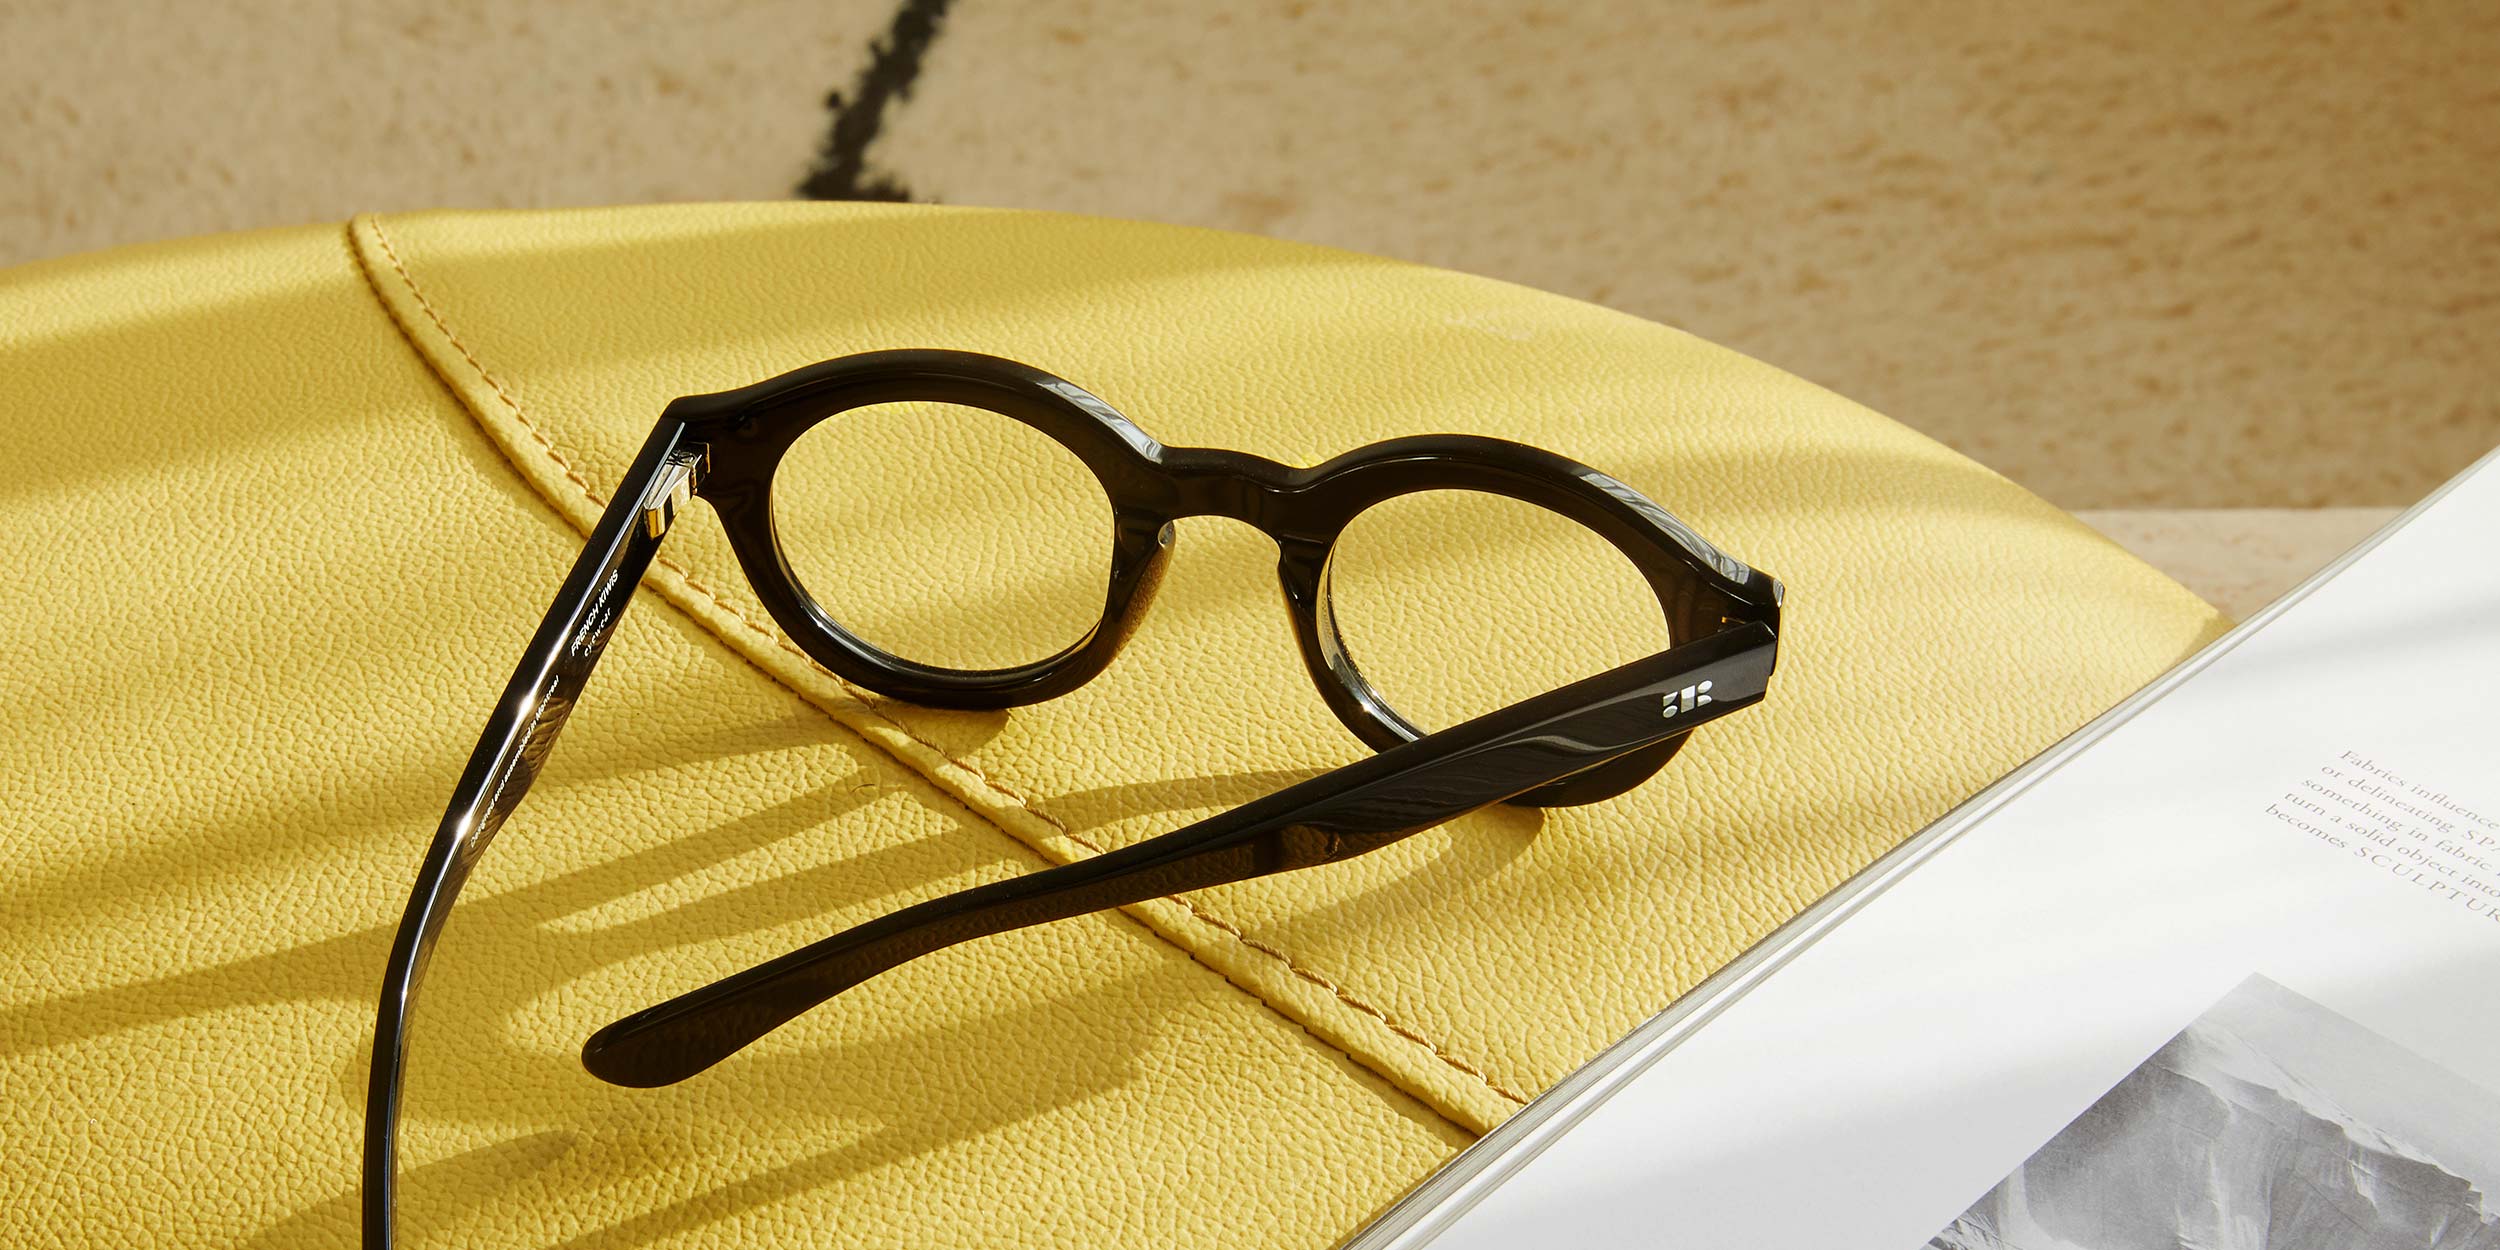 Photo Details of Eden Black Reading Glasses in a room